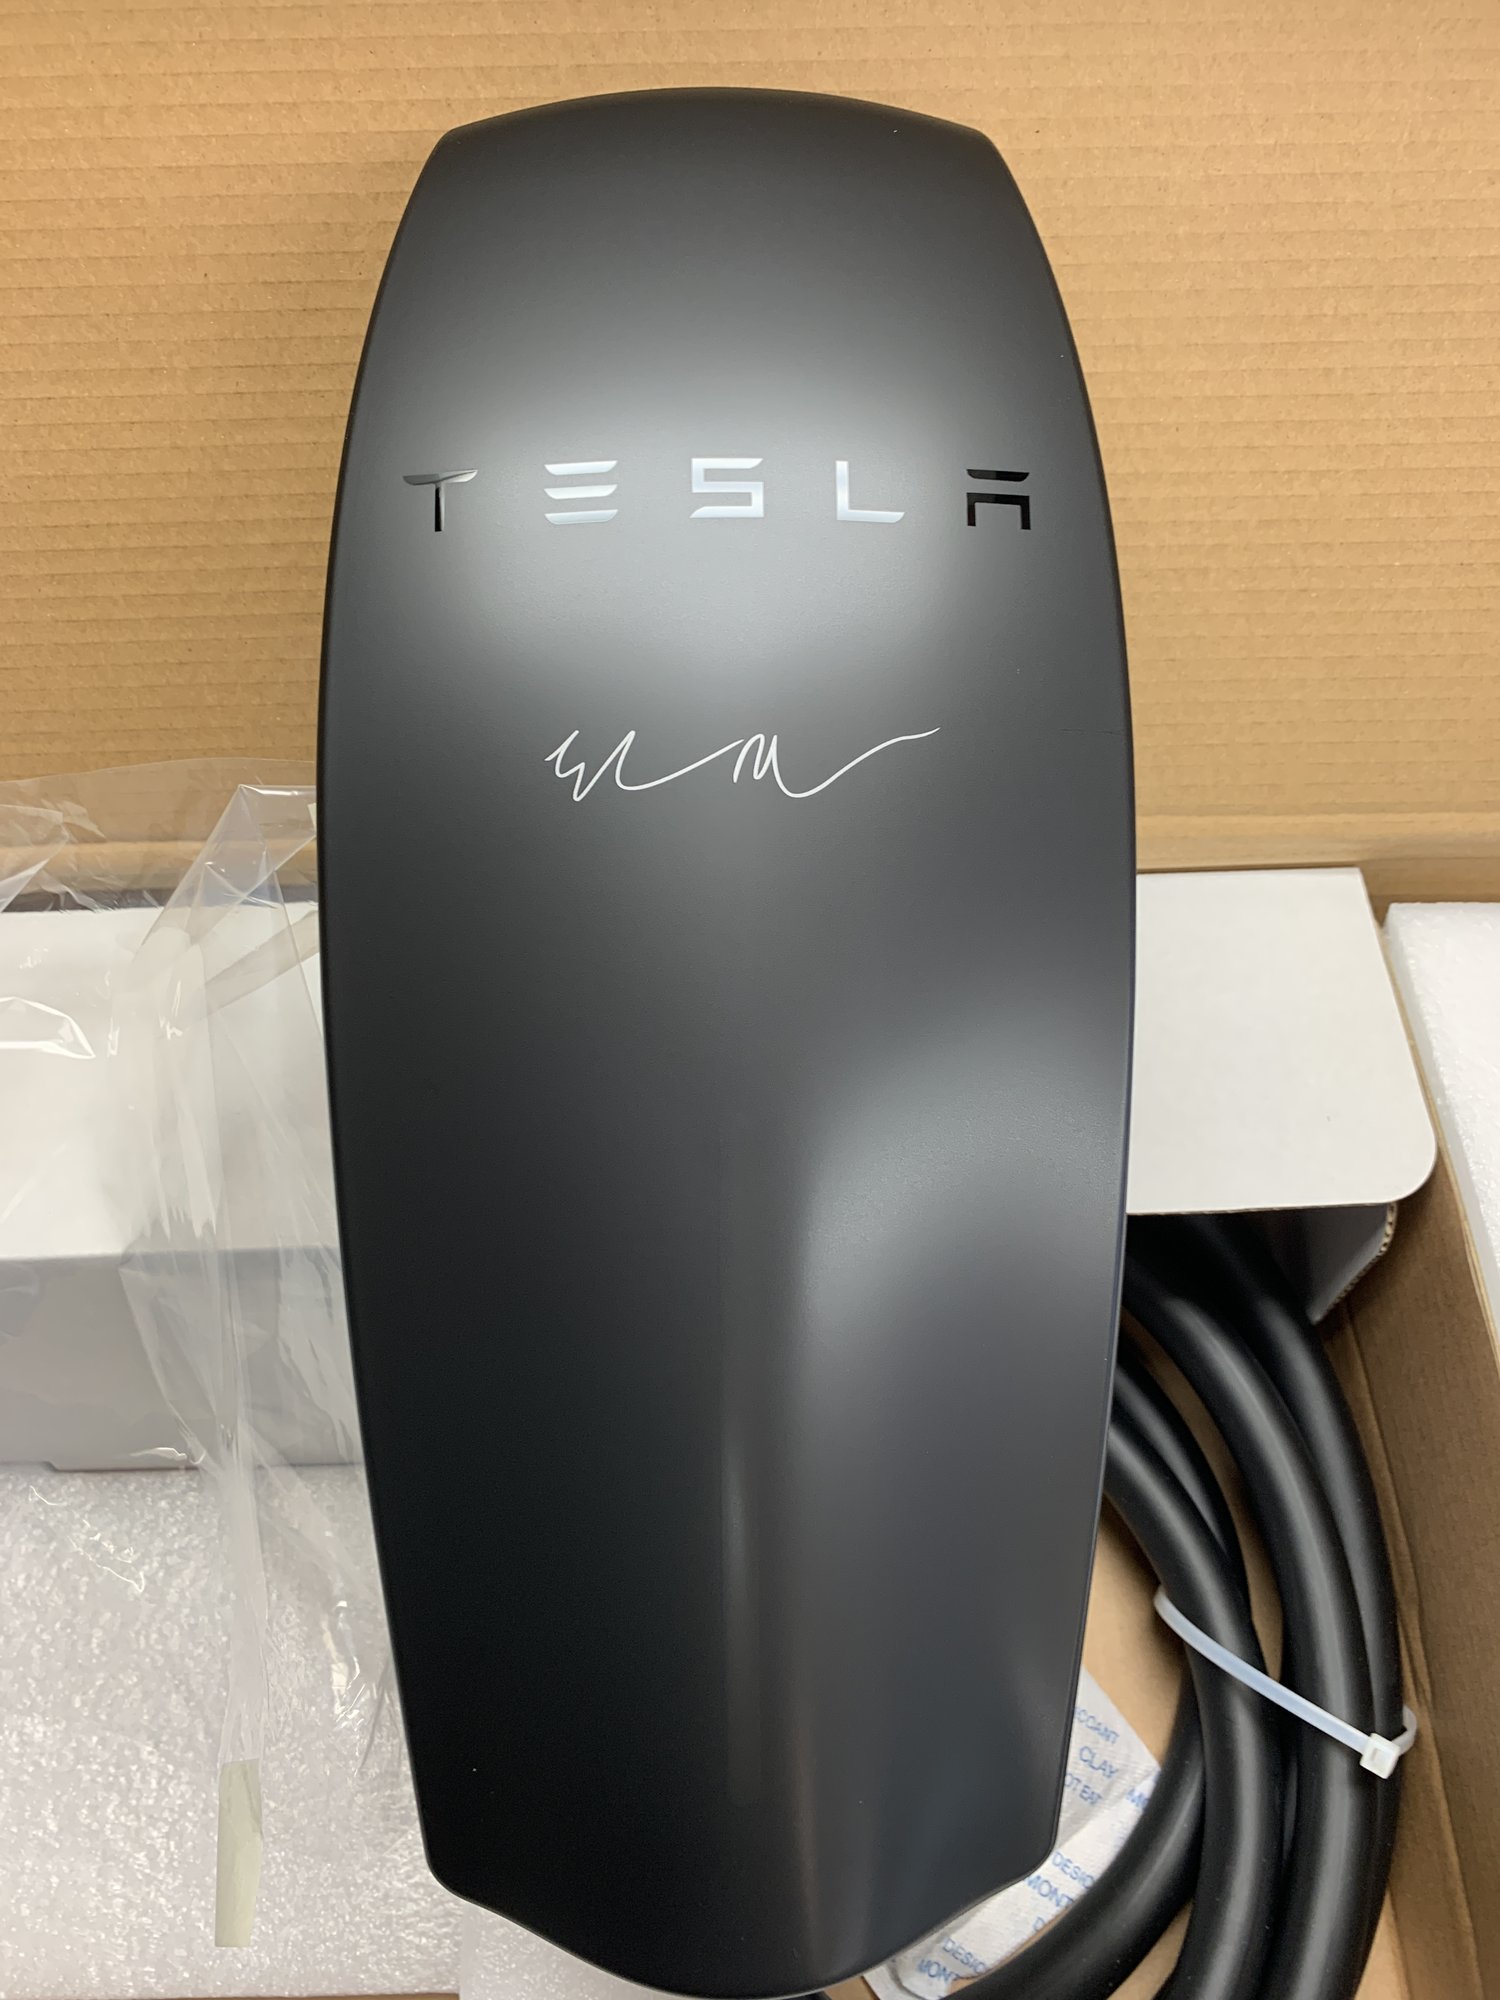 Tesla Elon Musk Signature Sticker Model 3 S X BLACK 4 inch Wall Charger HPWC 